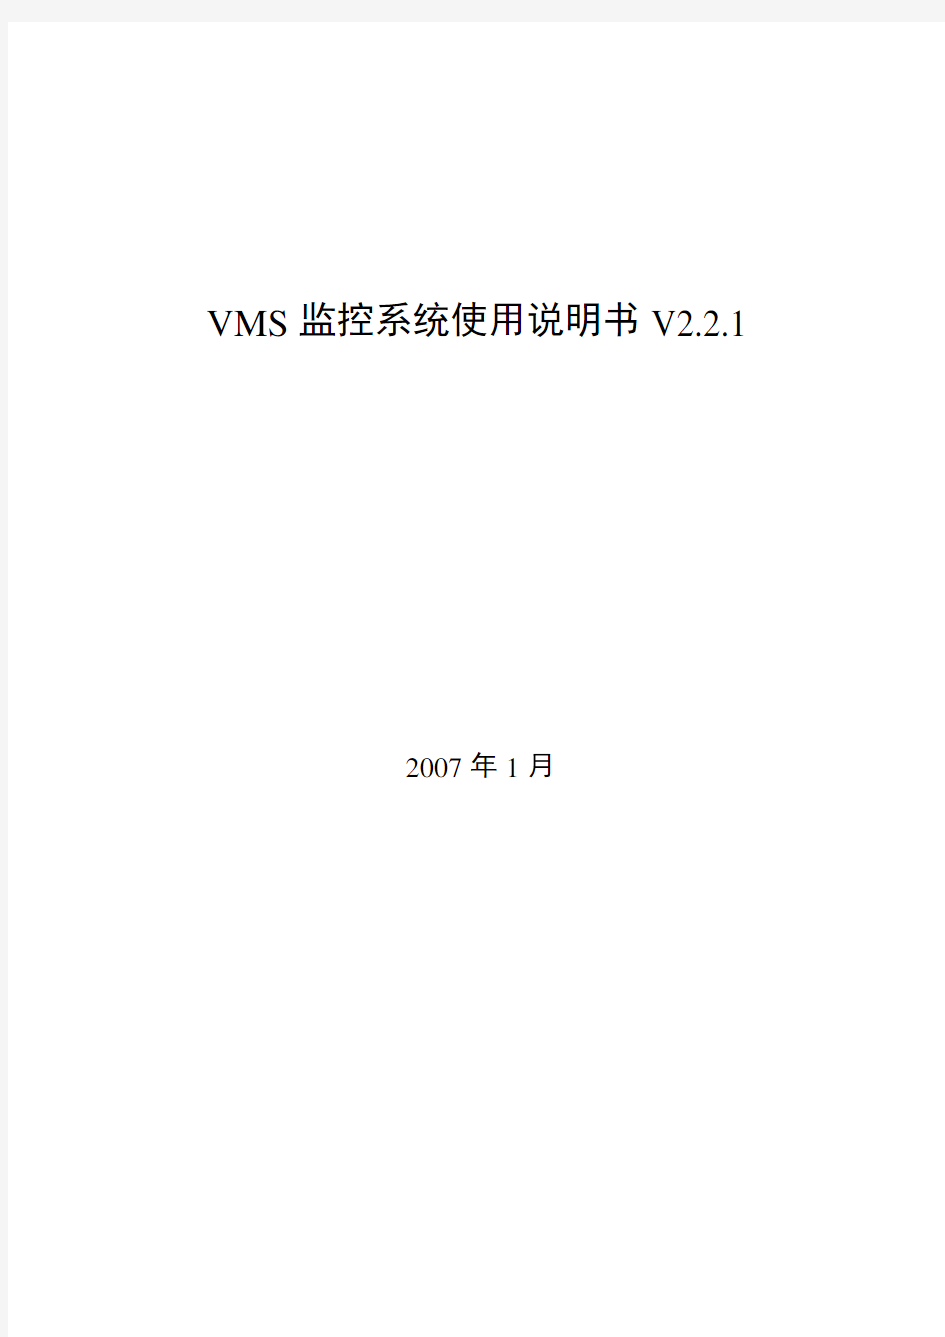 VMS监控系统使用说明书V2.2.1